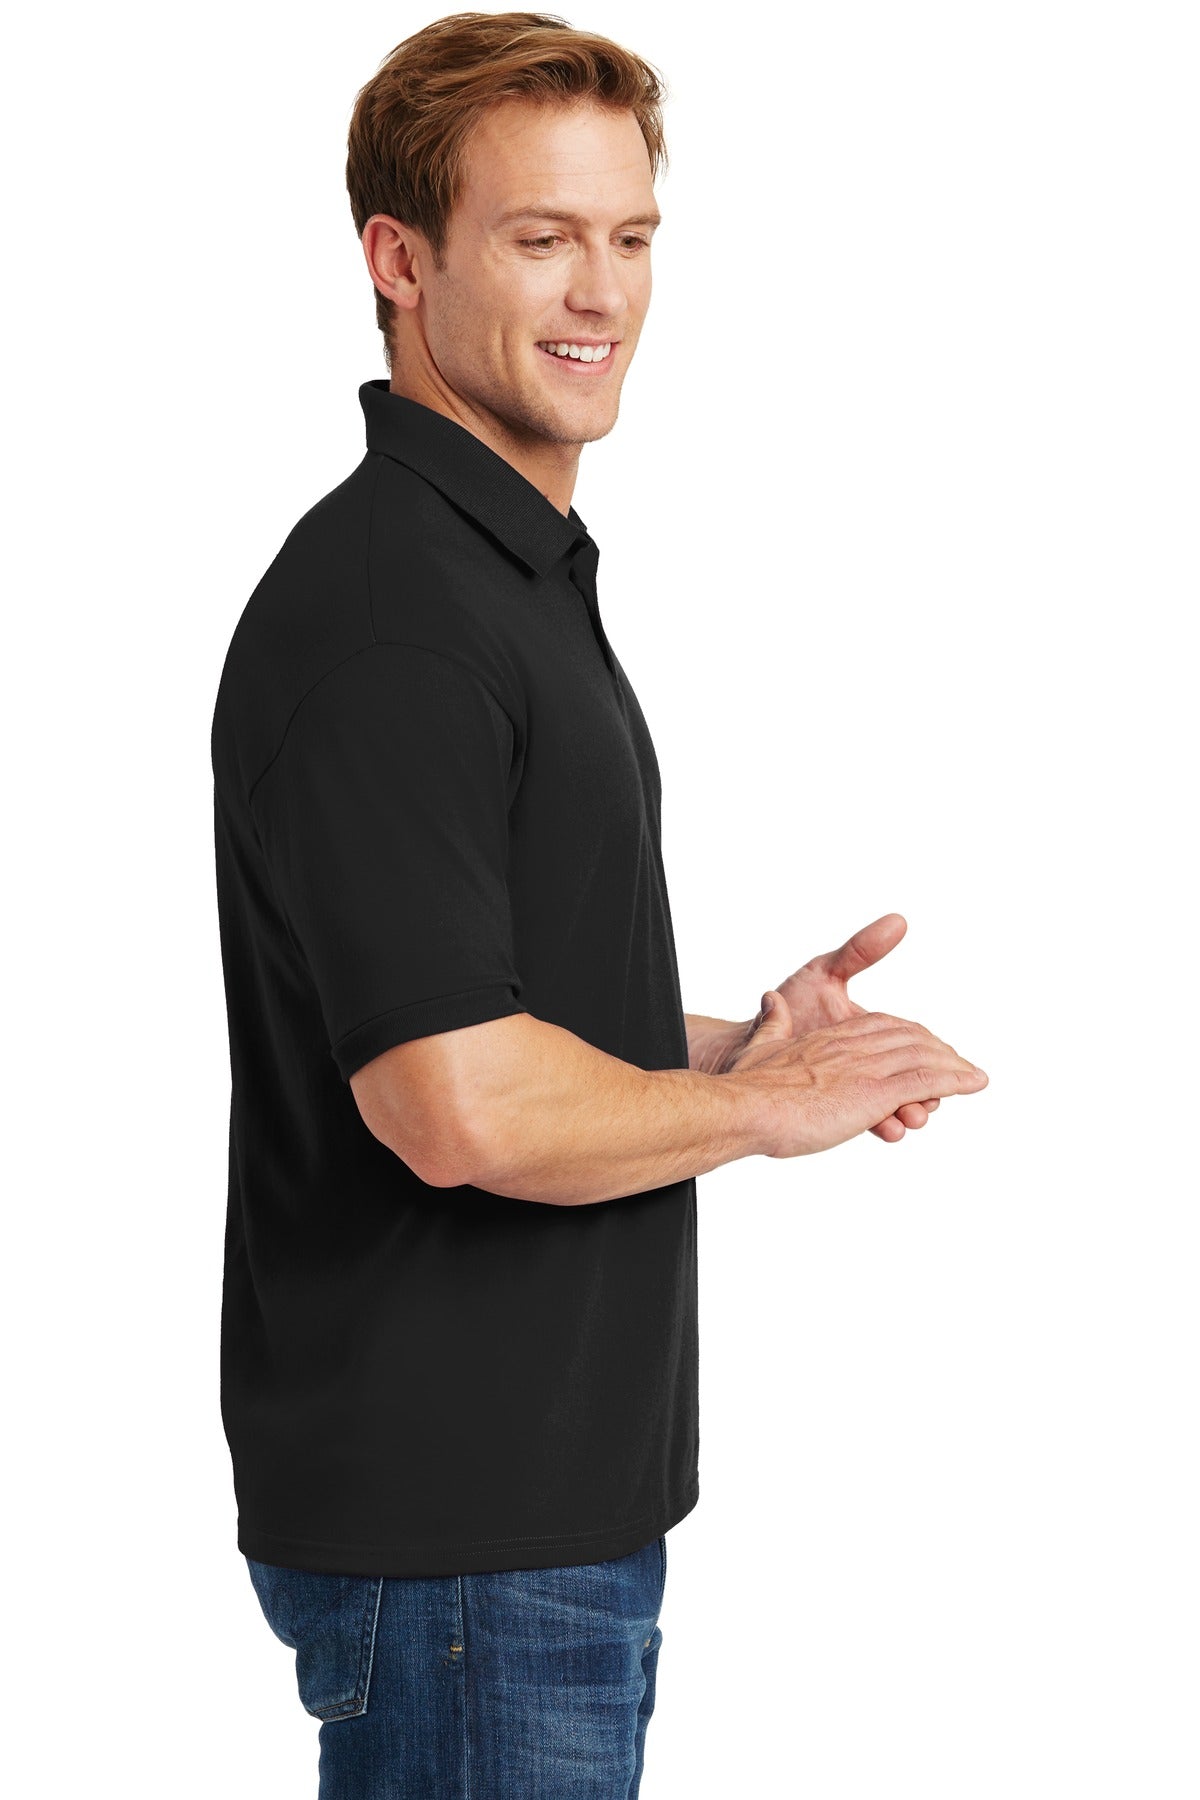 Hanes® EcoSmart® - 5.2-Ounce Jersey Knit Sport Shirt. 054X - DFW Impression